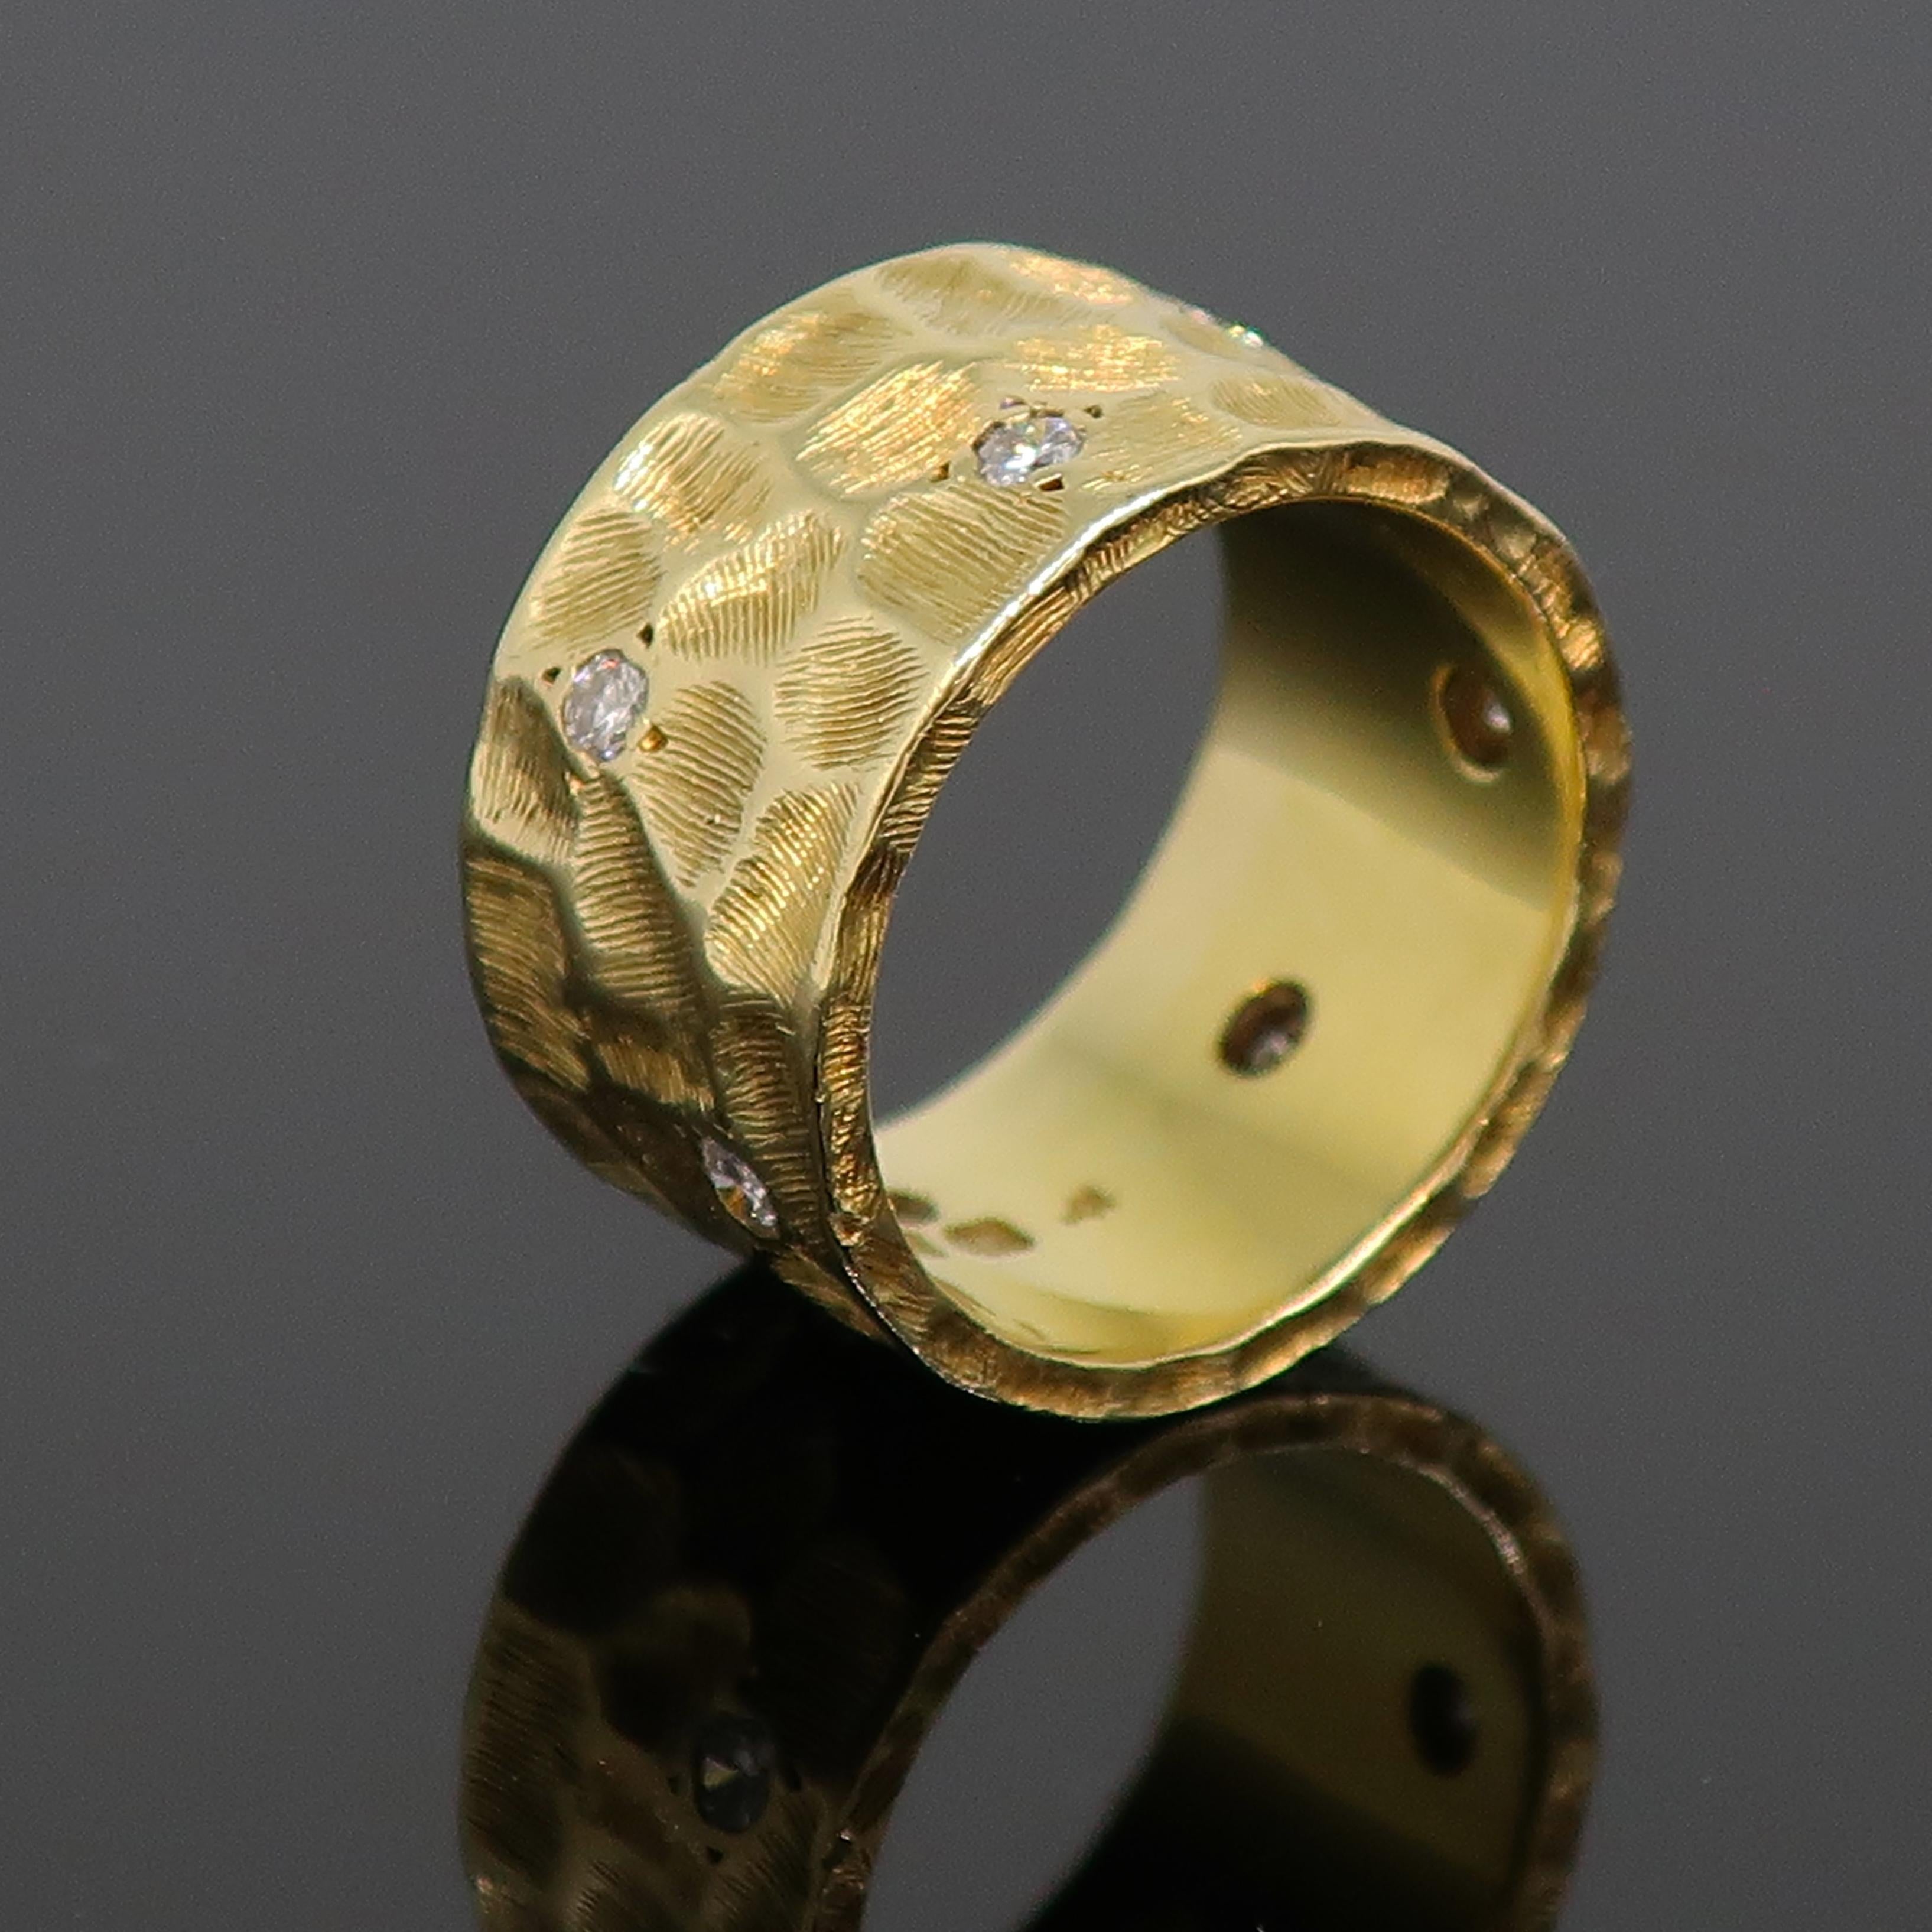 Brilliant Cut Kutchinsky Diamond Band Ring 18 Karat Yellow Gold 